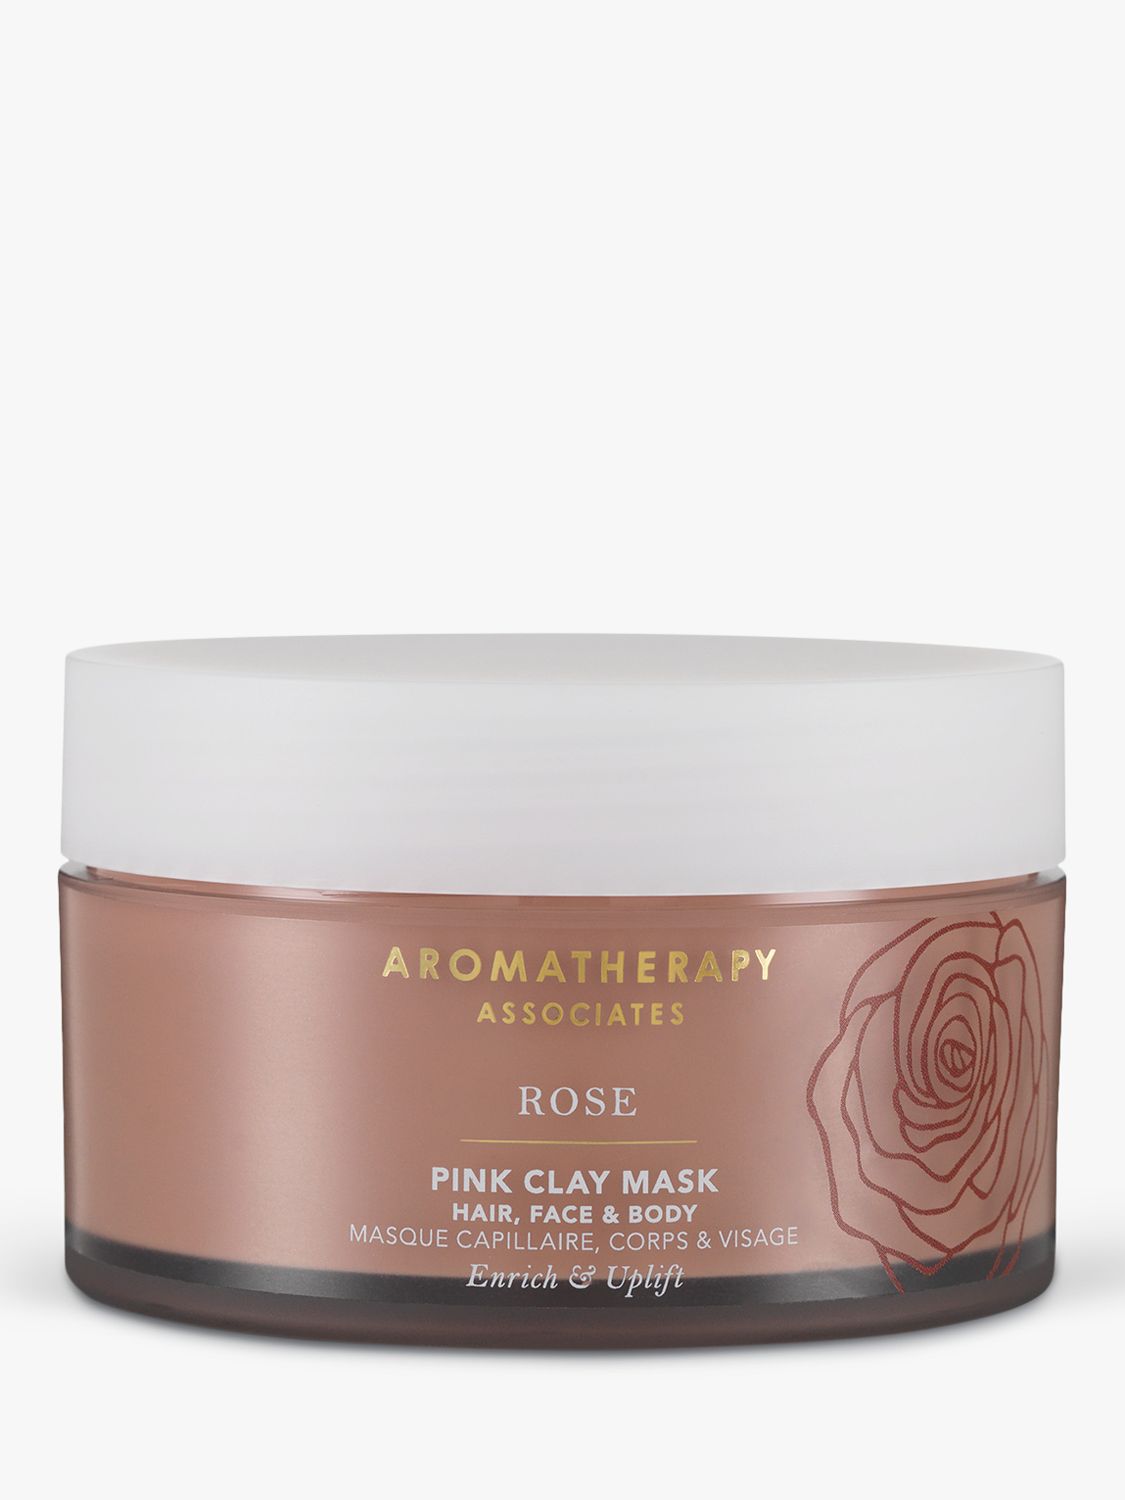 Aromatherapy Associates Rose Pink Clay Mask, 200ml 4